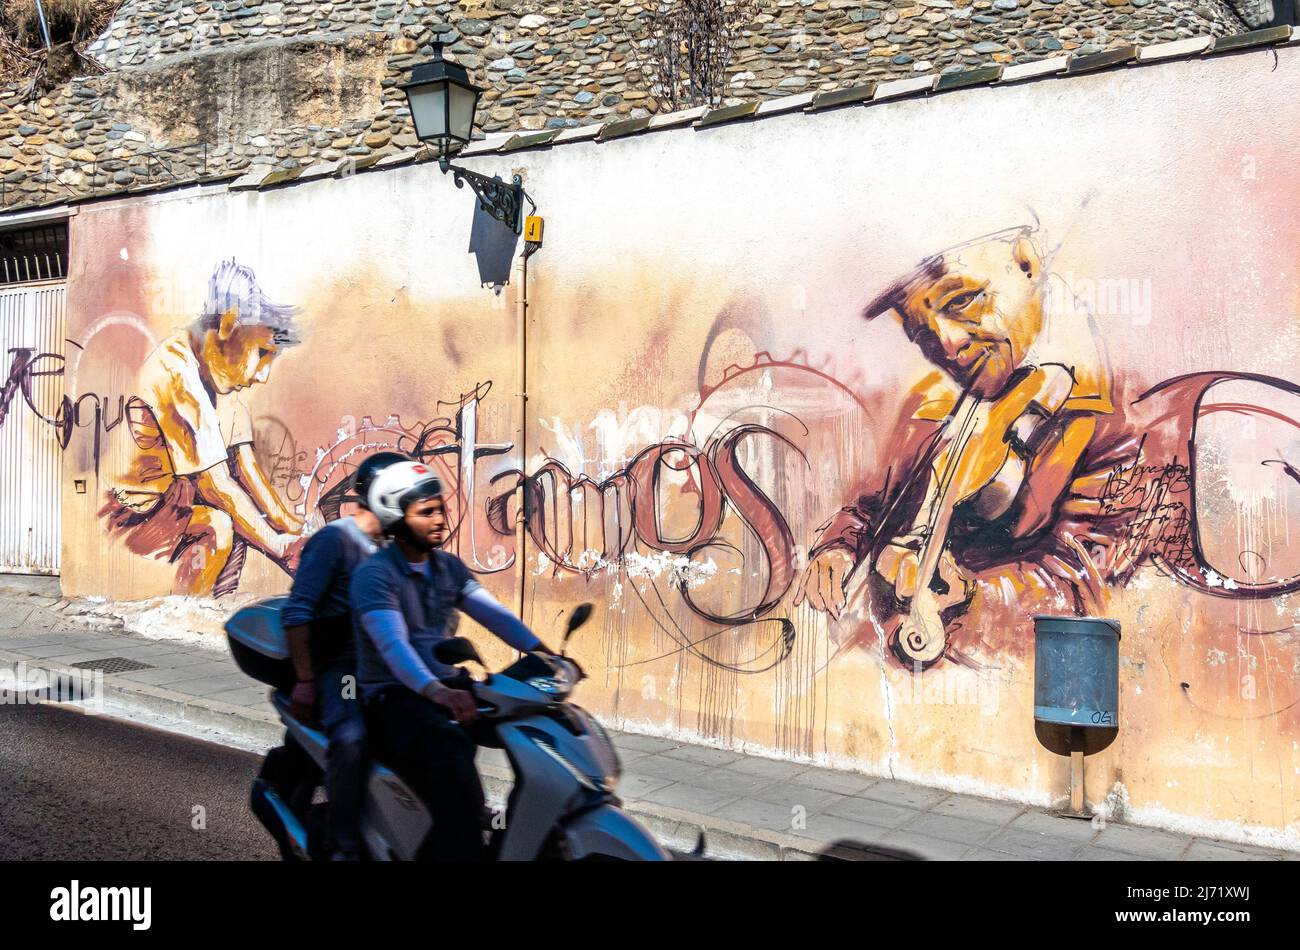 Boy, violin player Street art mural by artist Raul Ruiz.by Spanish muralist El Nino, Realejo, Granada, Andalucia, Spain Stock Photo